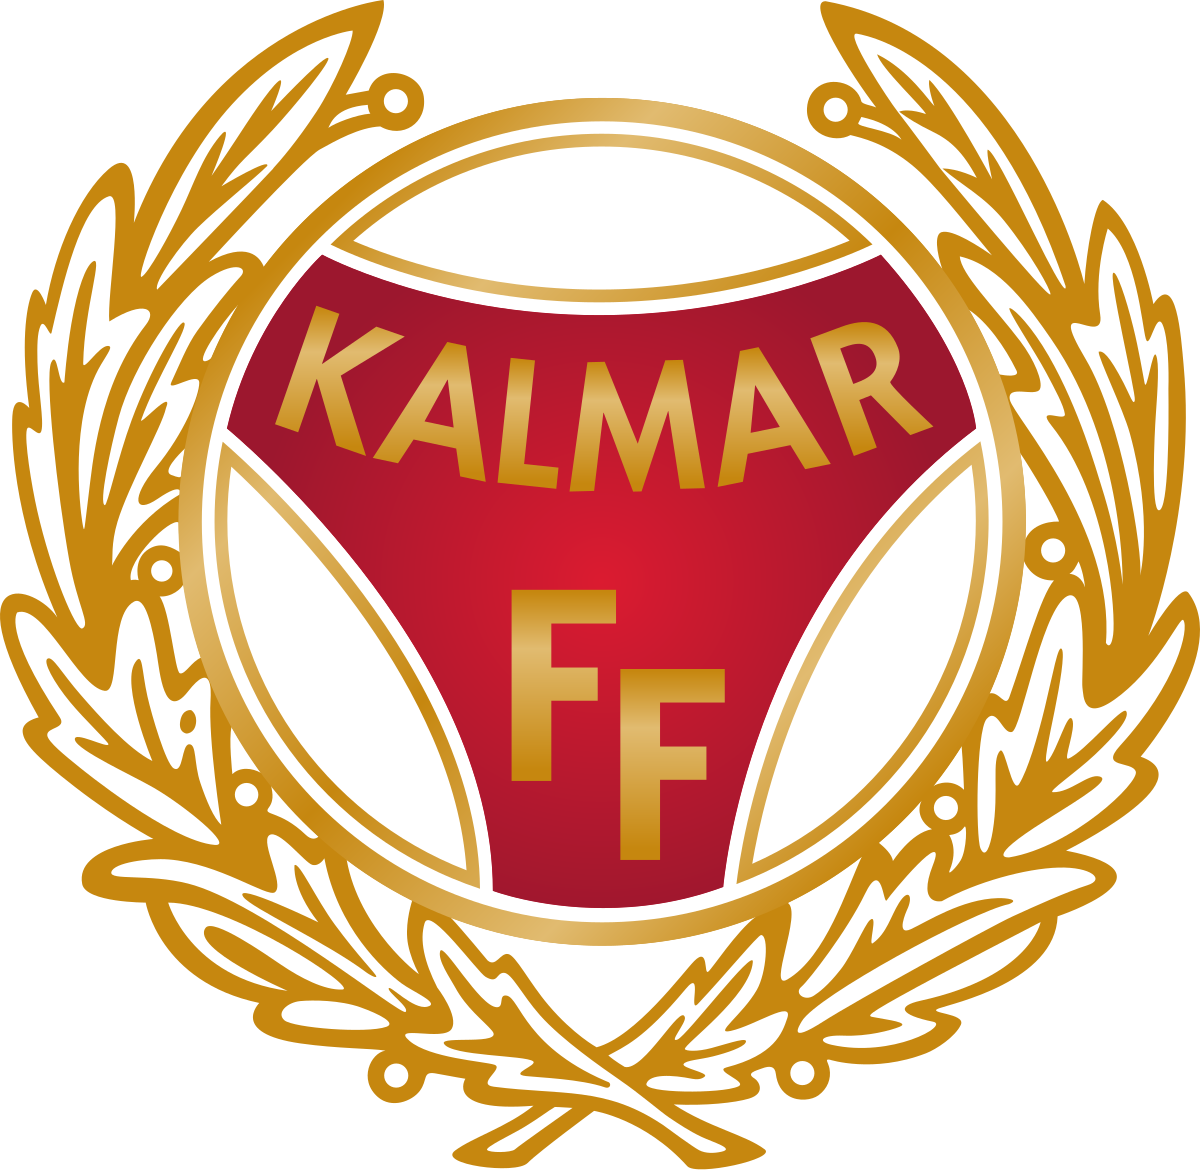 Herb Kalmar FF